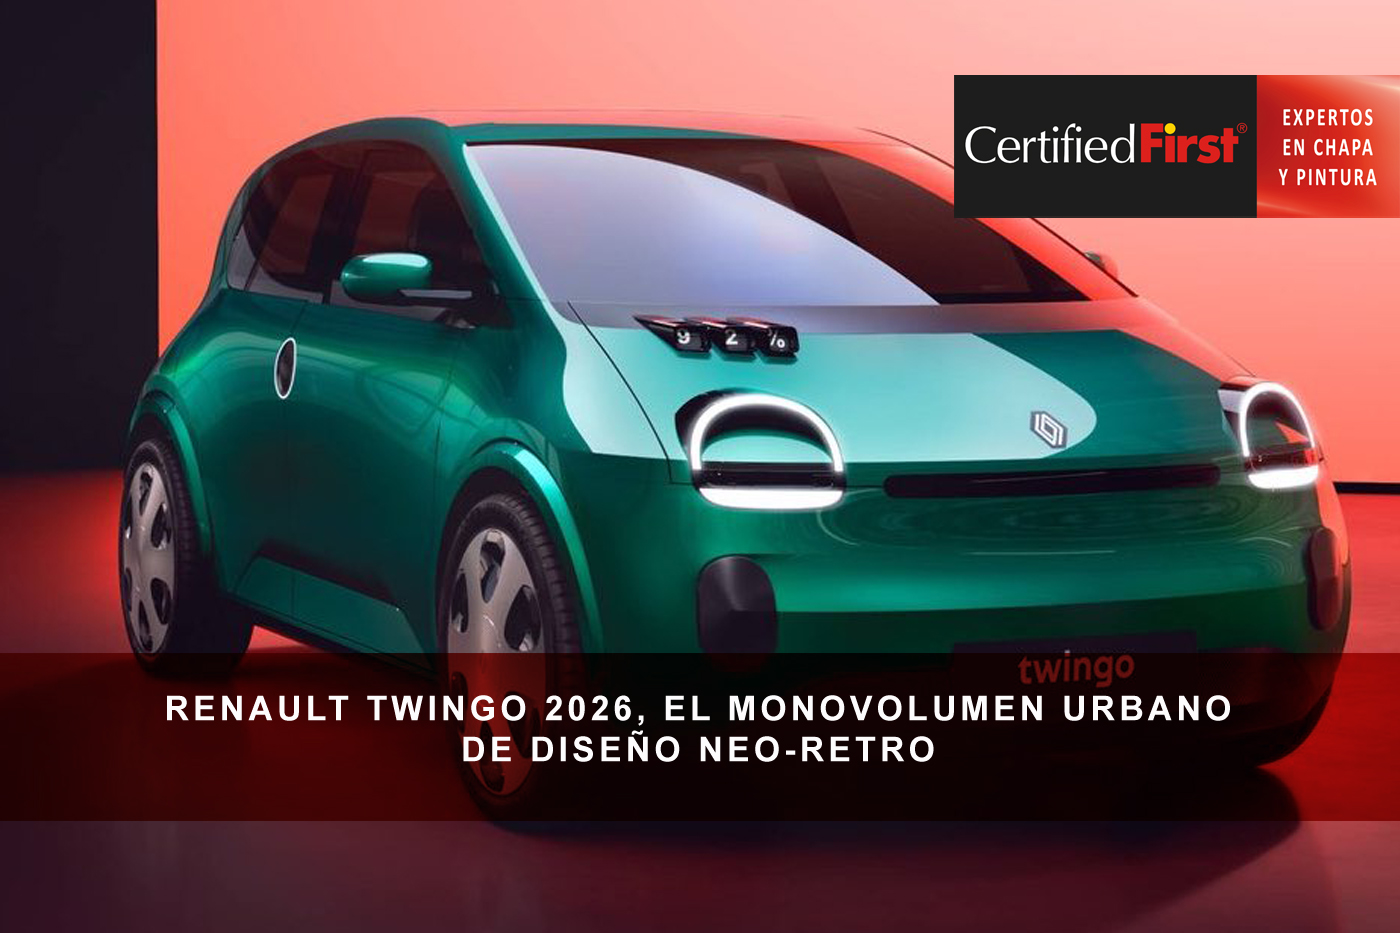 Renault Twingo 2026, el monovolumen urbano de diseño neo-retro